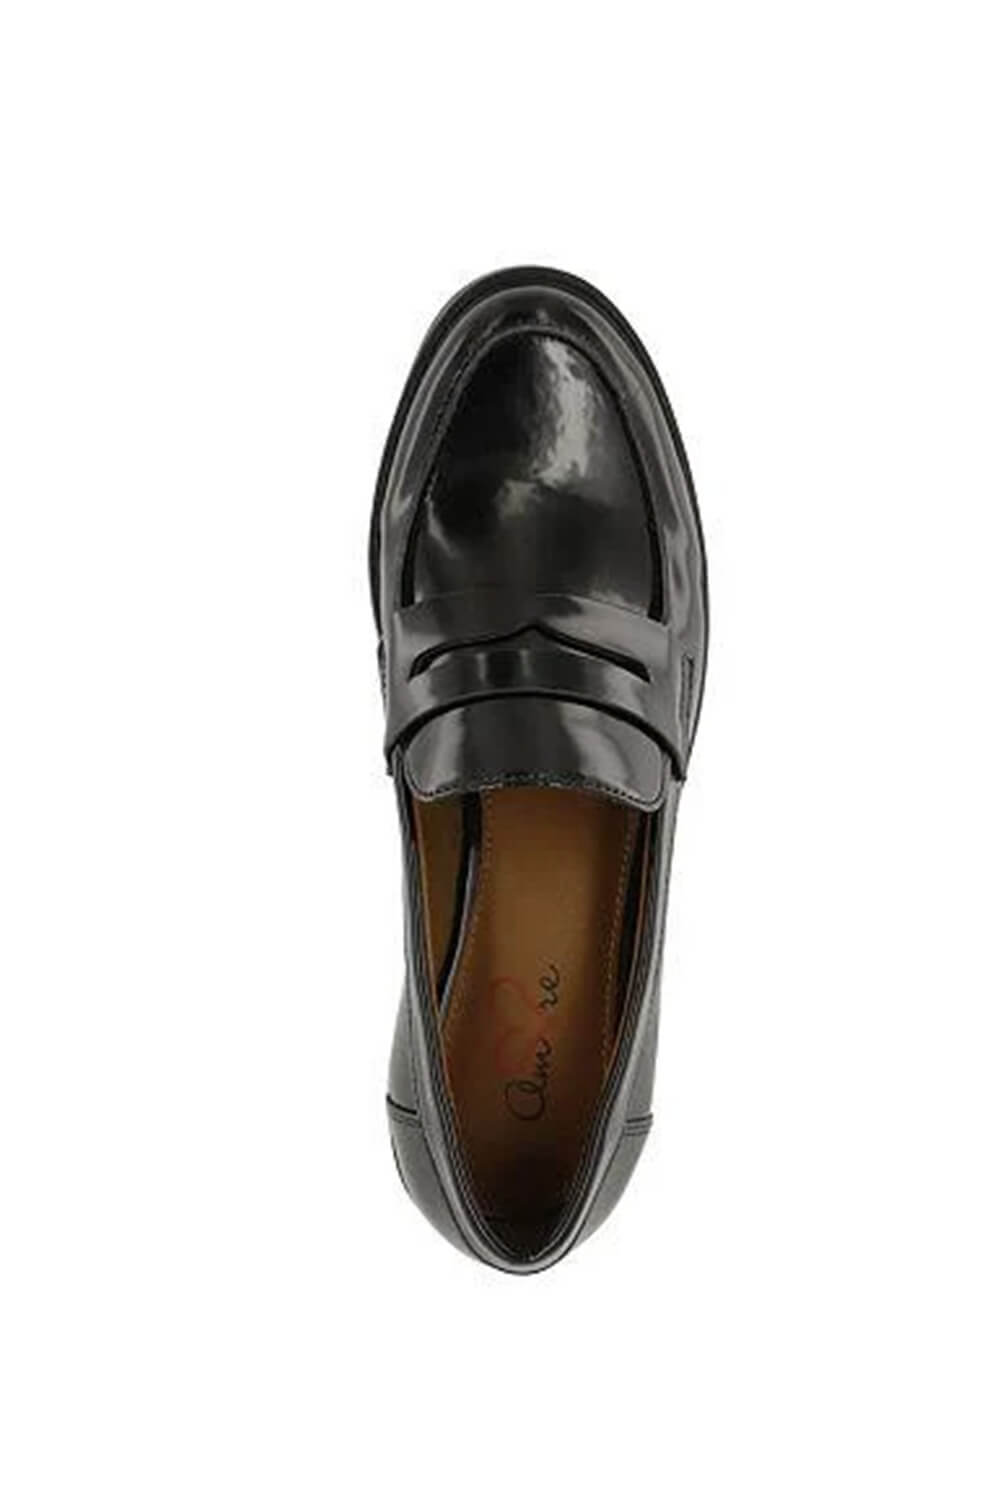 MIA Shoes Hali Loafers for Women in Black | GSA1384501-BLACK – Glik's